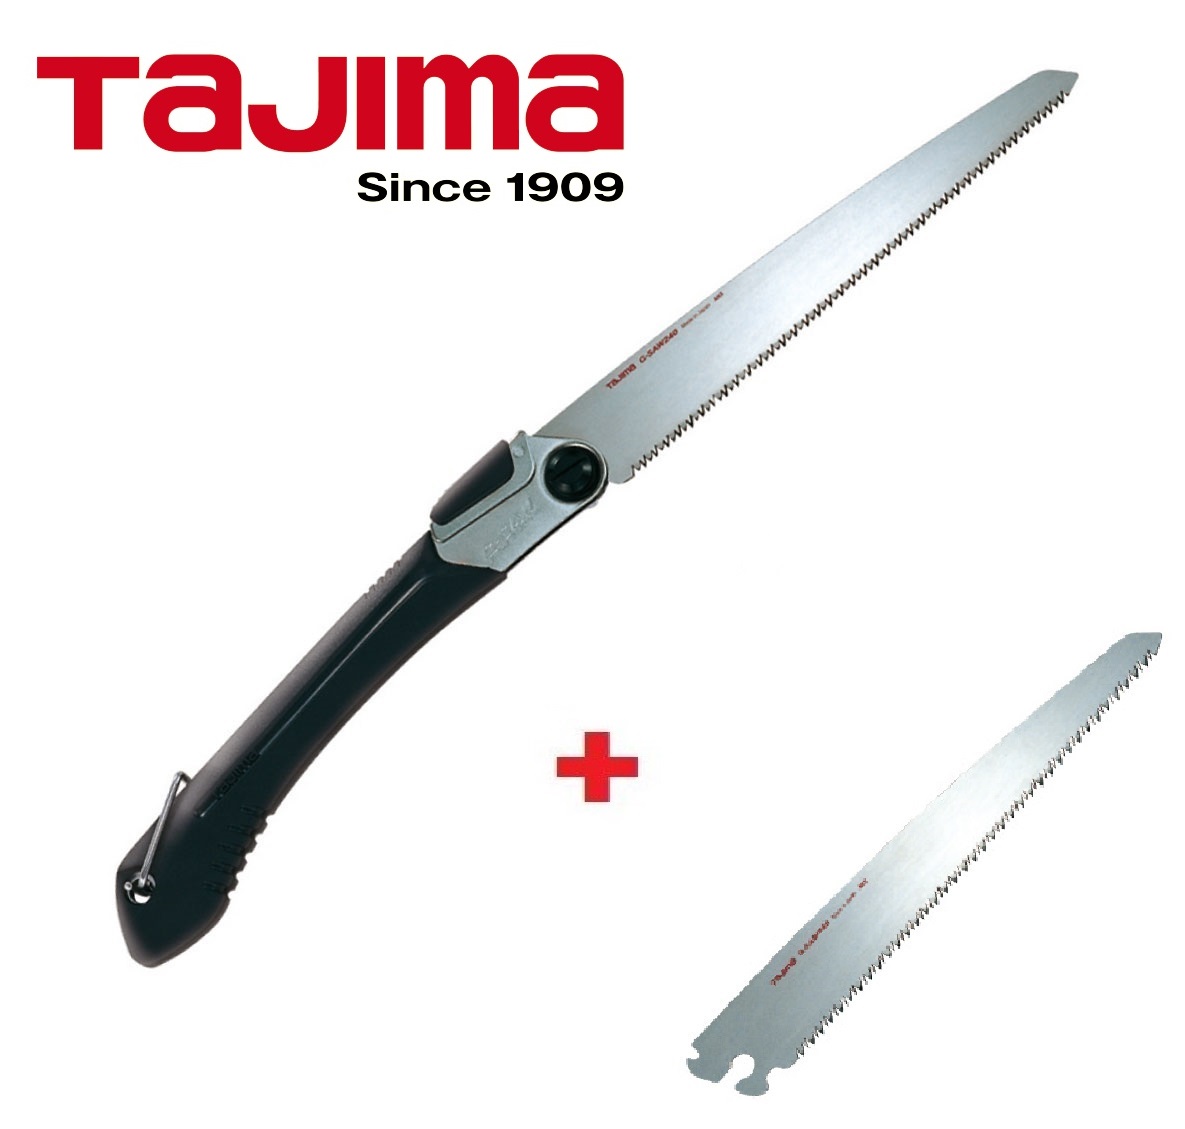 Ножовка складная TAJIMA Rapid-Pull G-Saw GK-G210 (210мм) + запасное полотно GKBG210(210мм) складная пила silky super accel 210 мм 14 зубьев